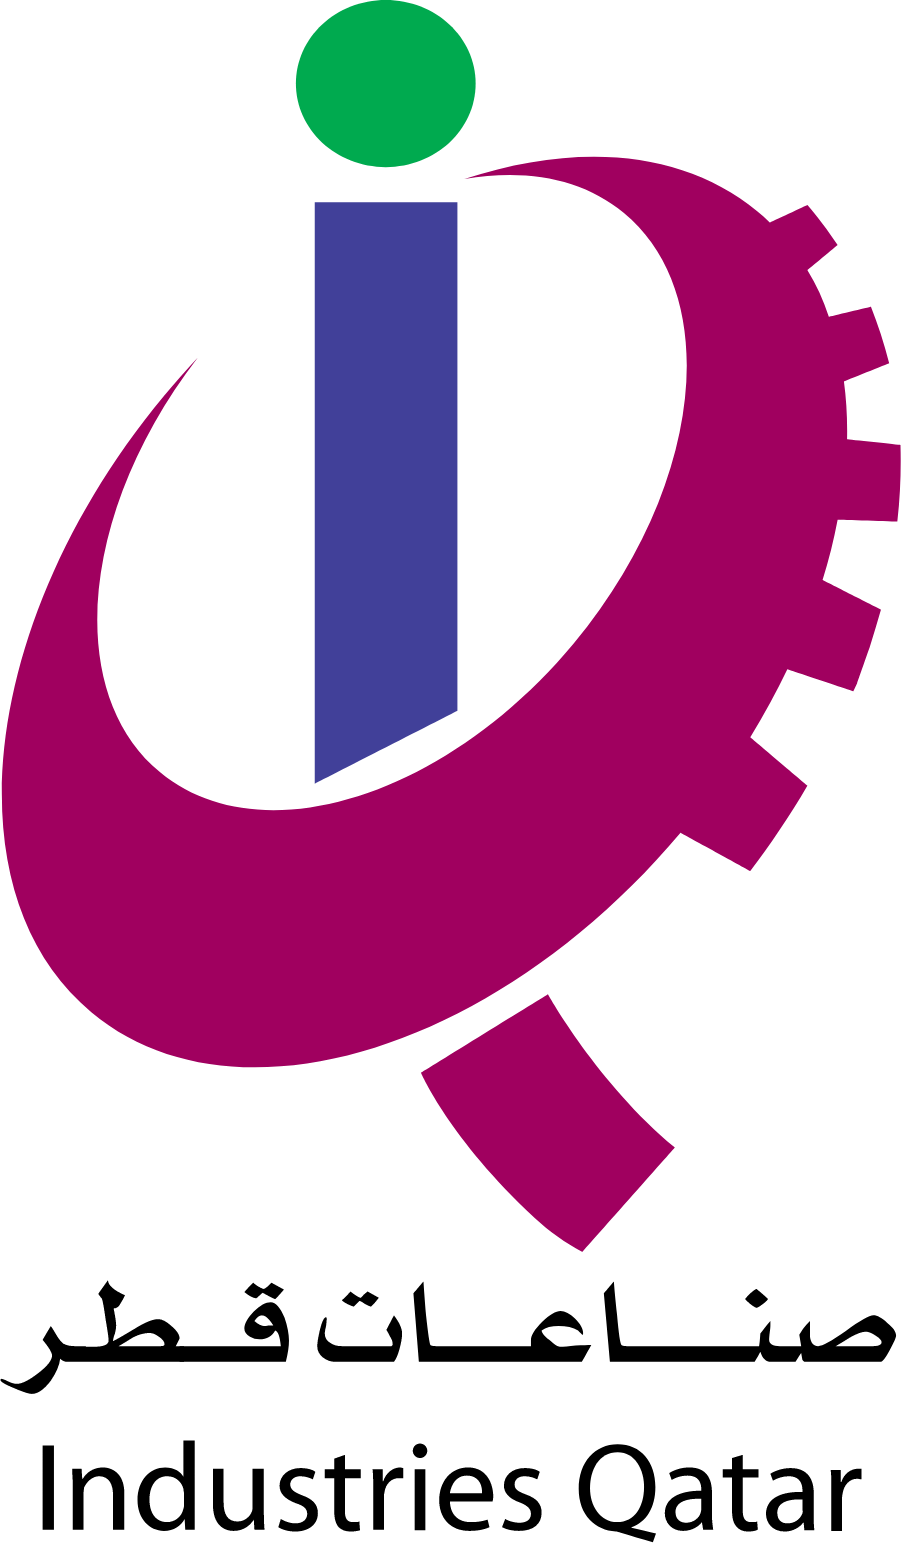 Industries Qatar logo large (transparent PNG)